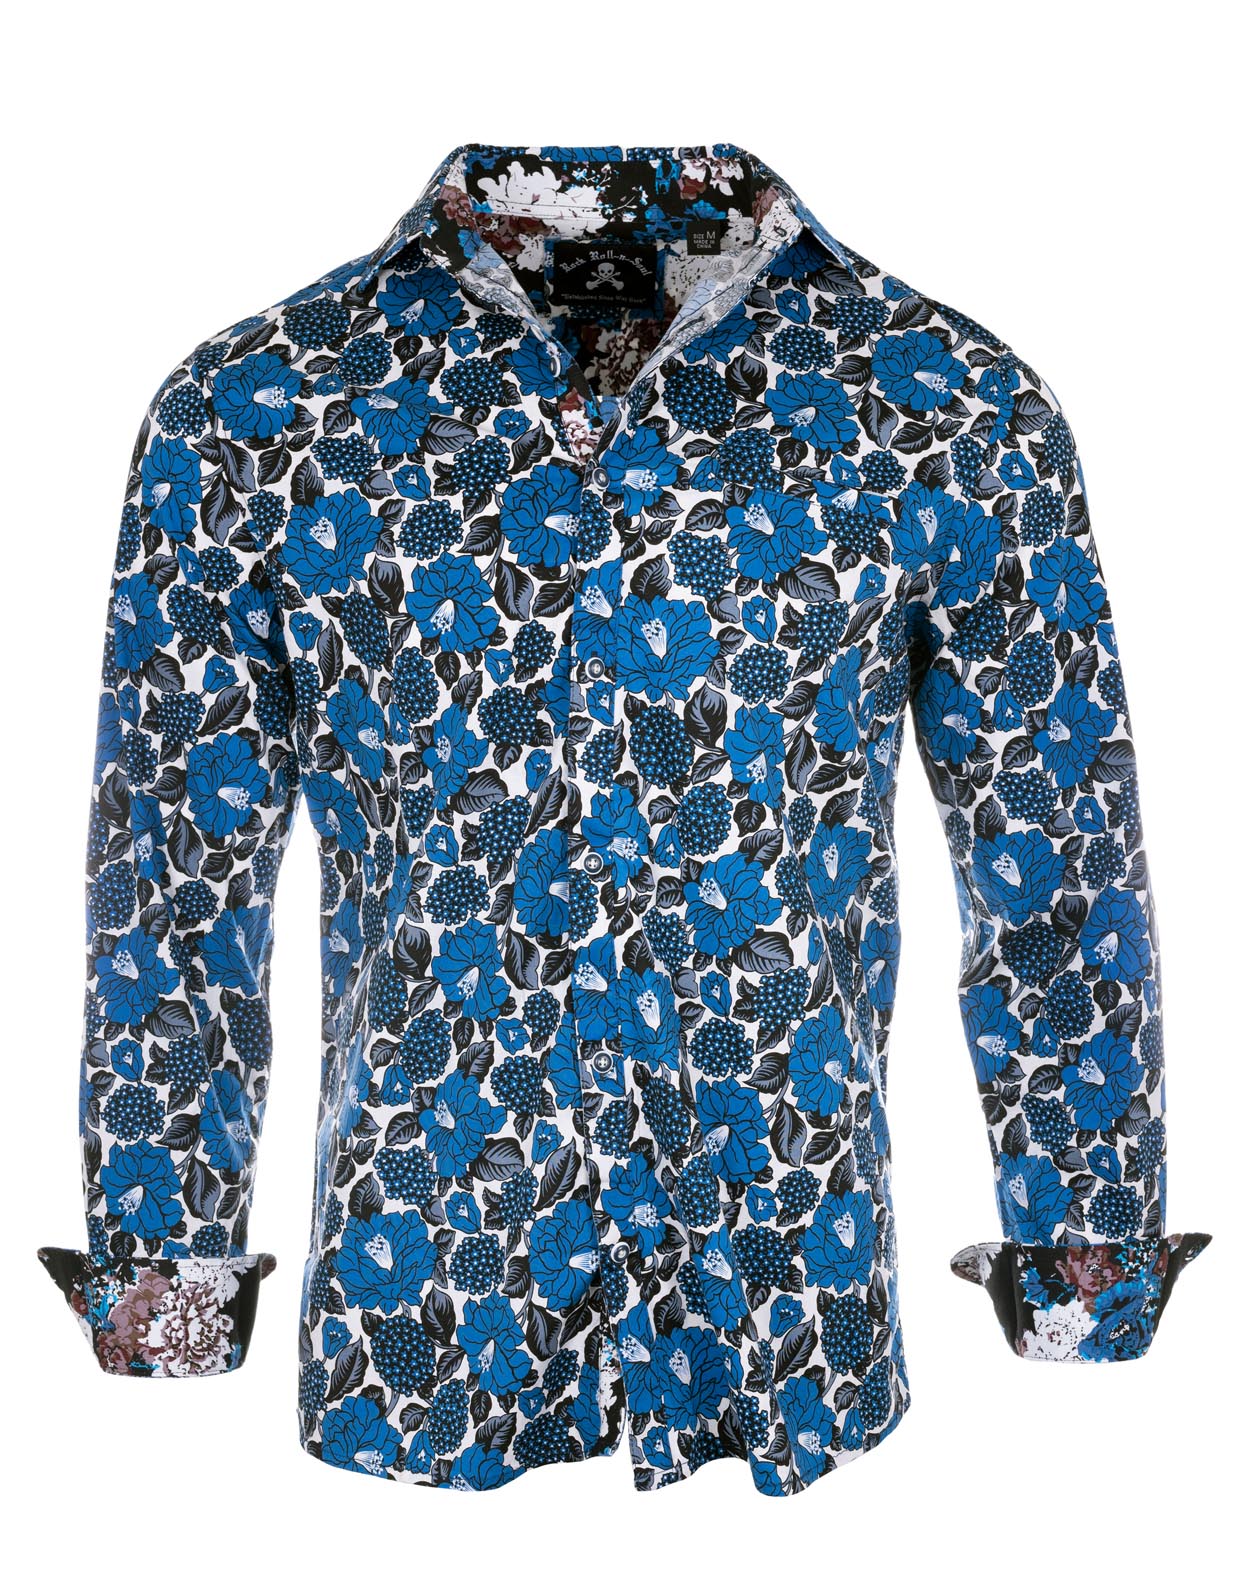 Men's LS Fashion Floral Shirt | Blue Orchid by Rock Roll n Soul